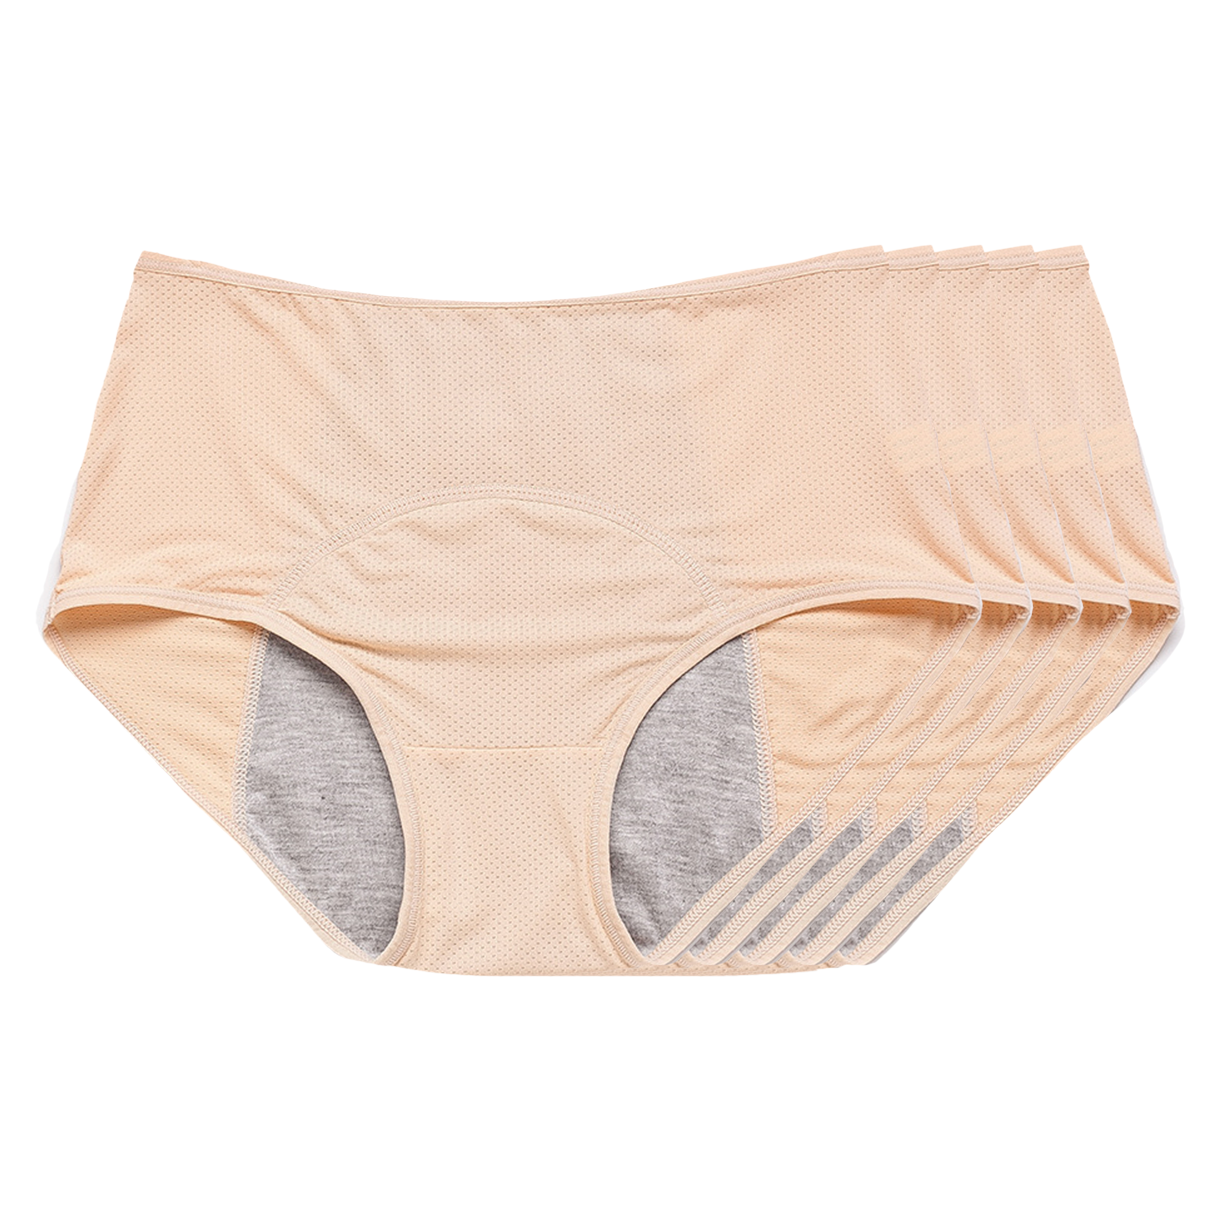 NEW: Comfy & Discreet Leakproof Underwear (Beige)